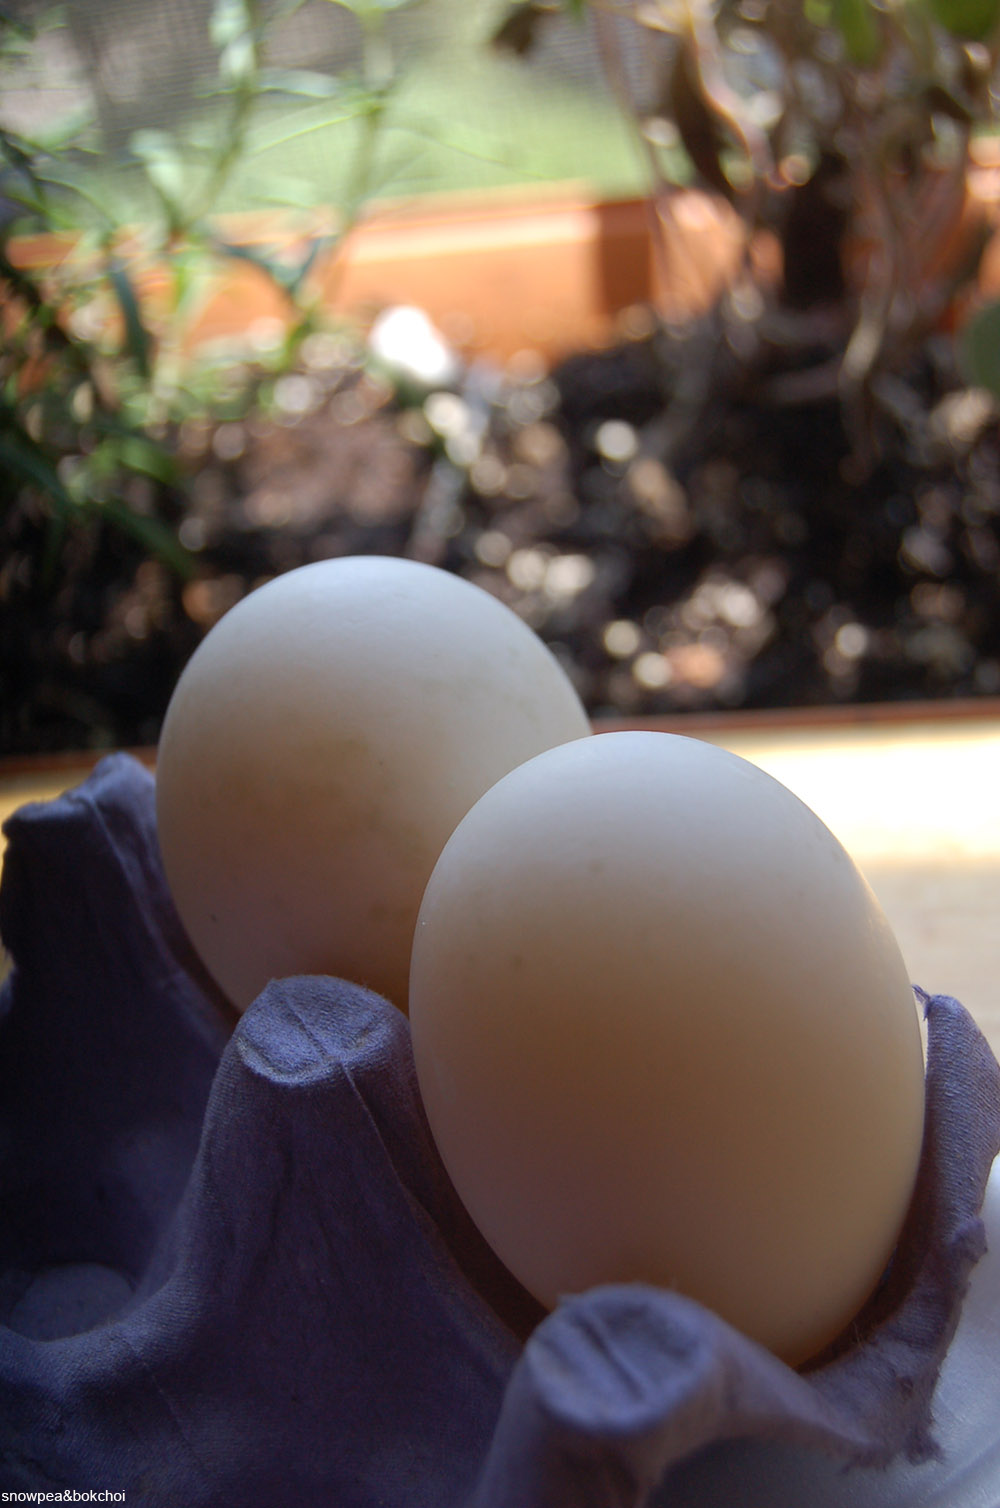 two white ducks eggs in carton